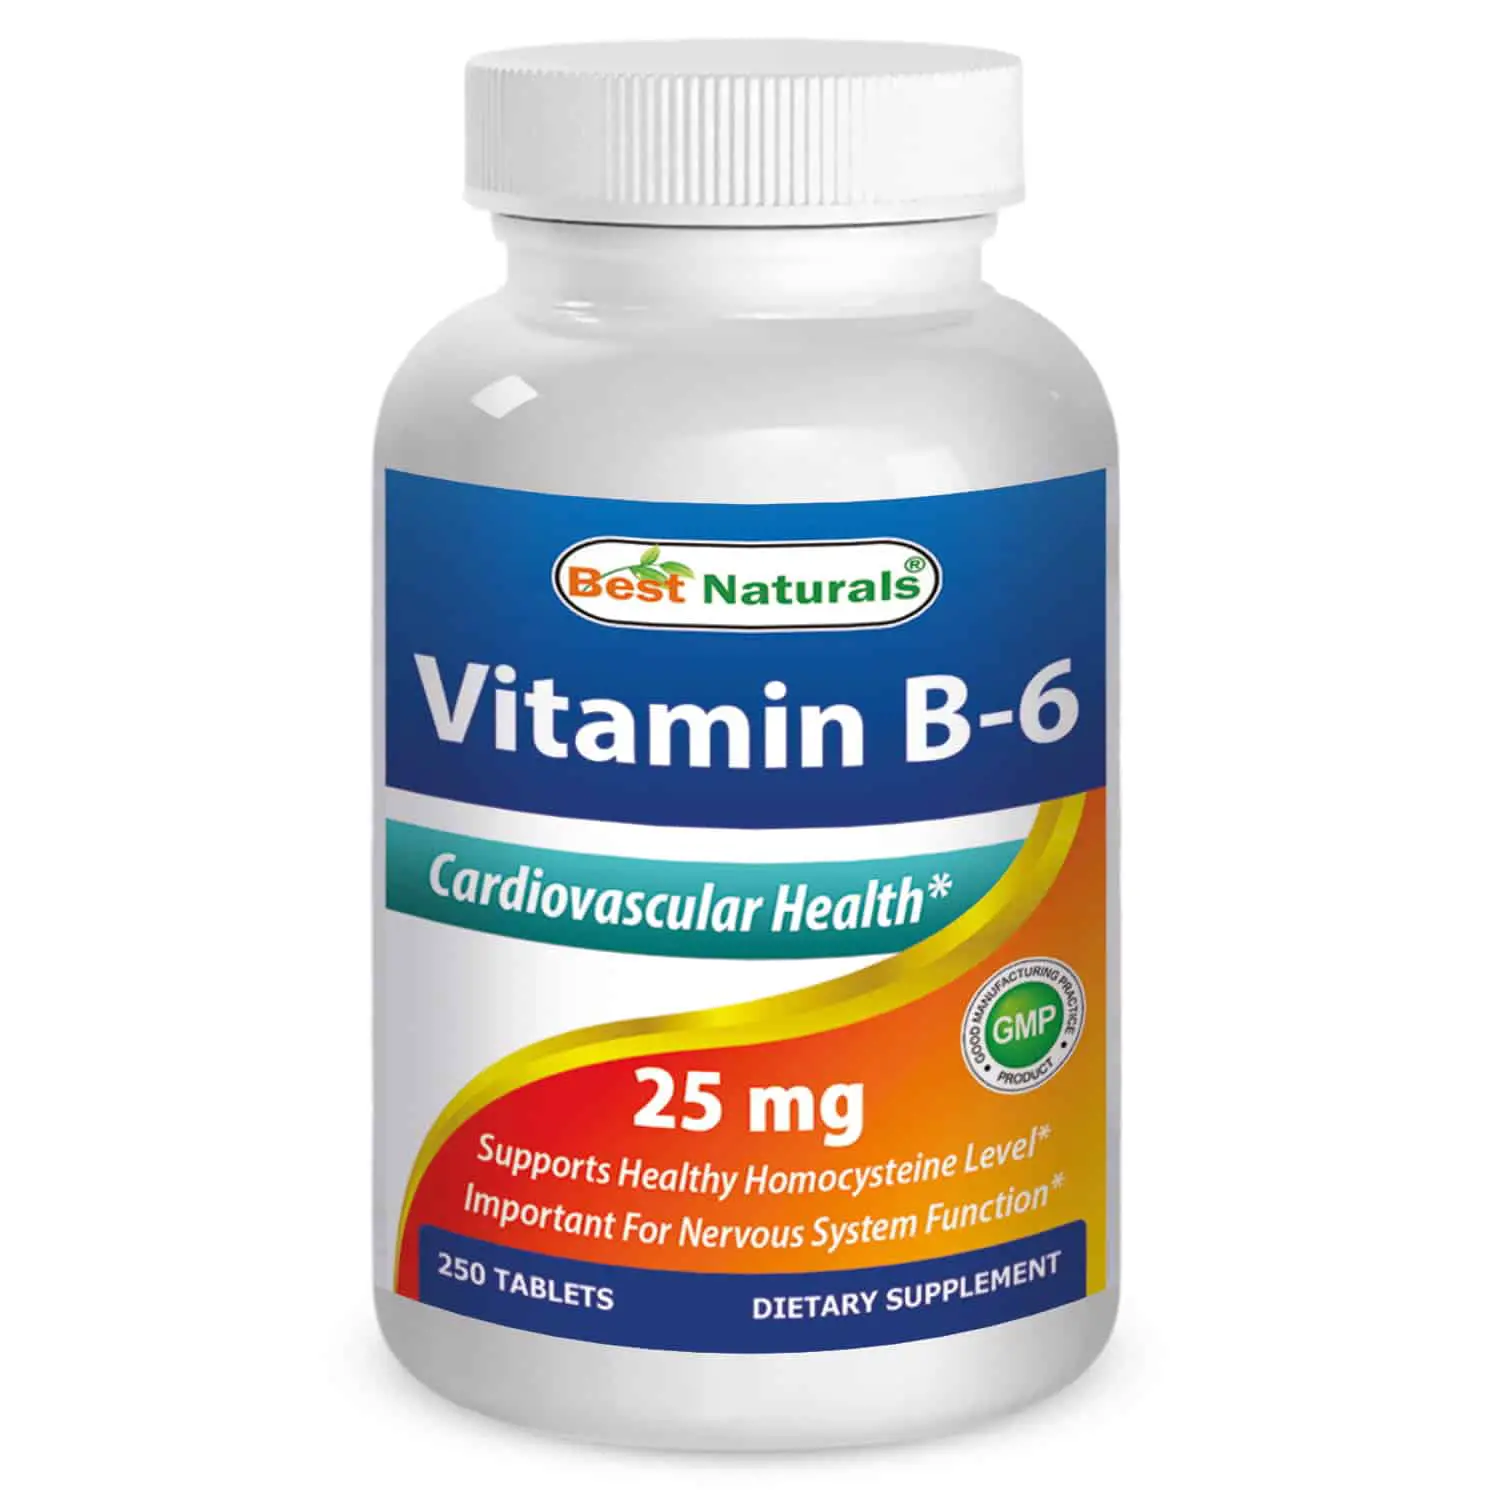 Best Naturals Vitamin B